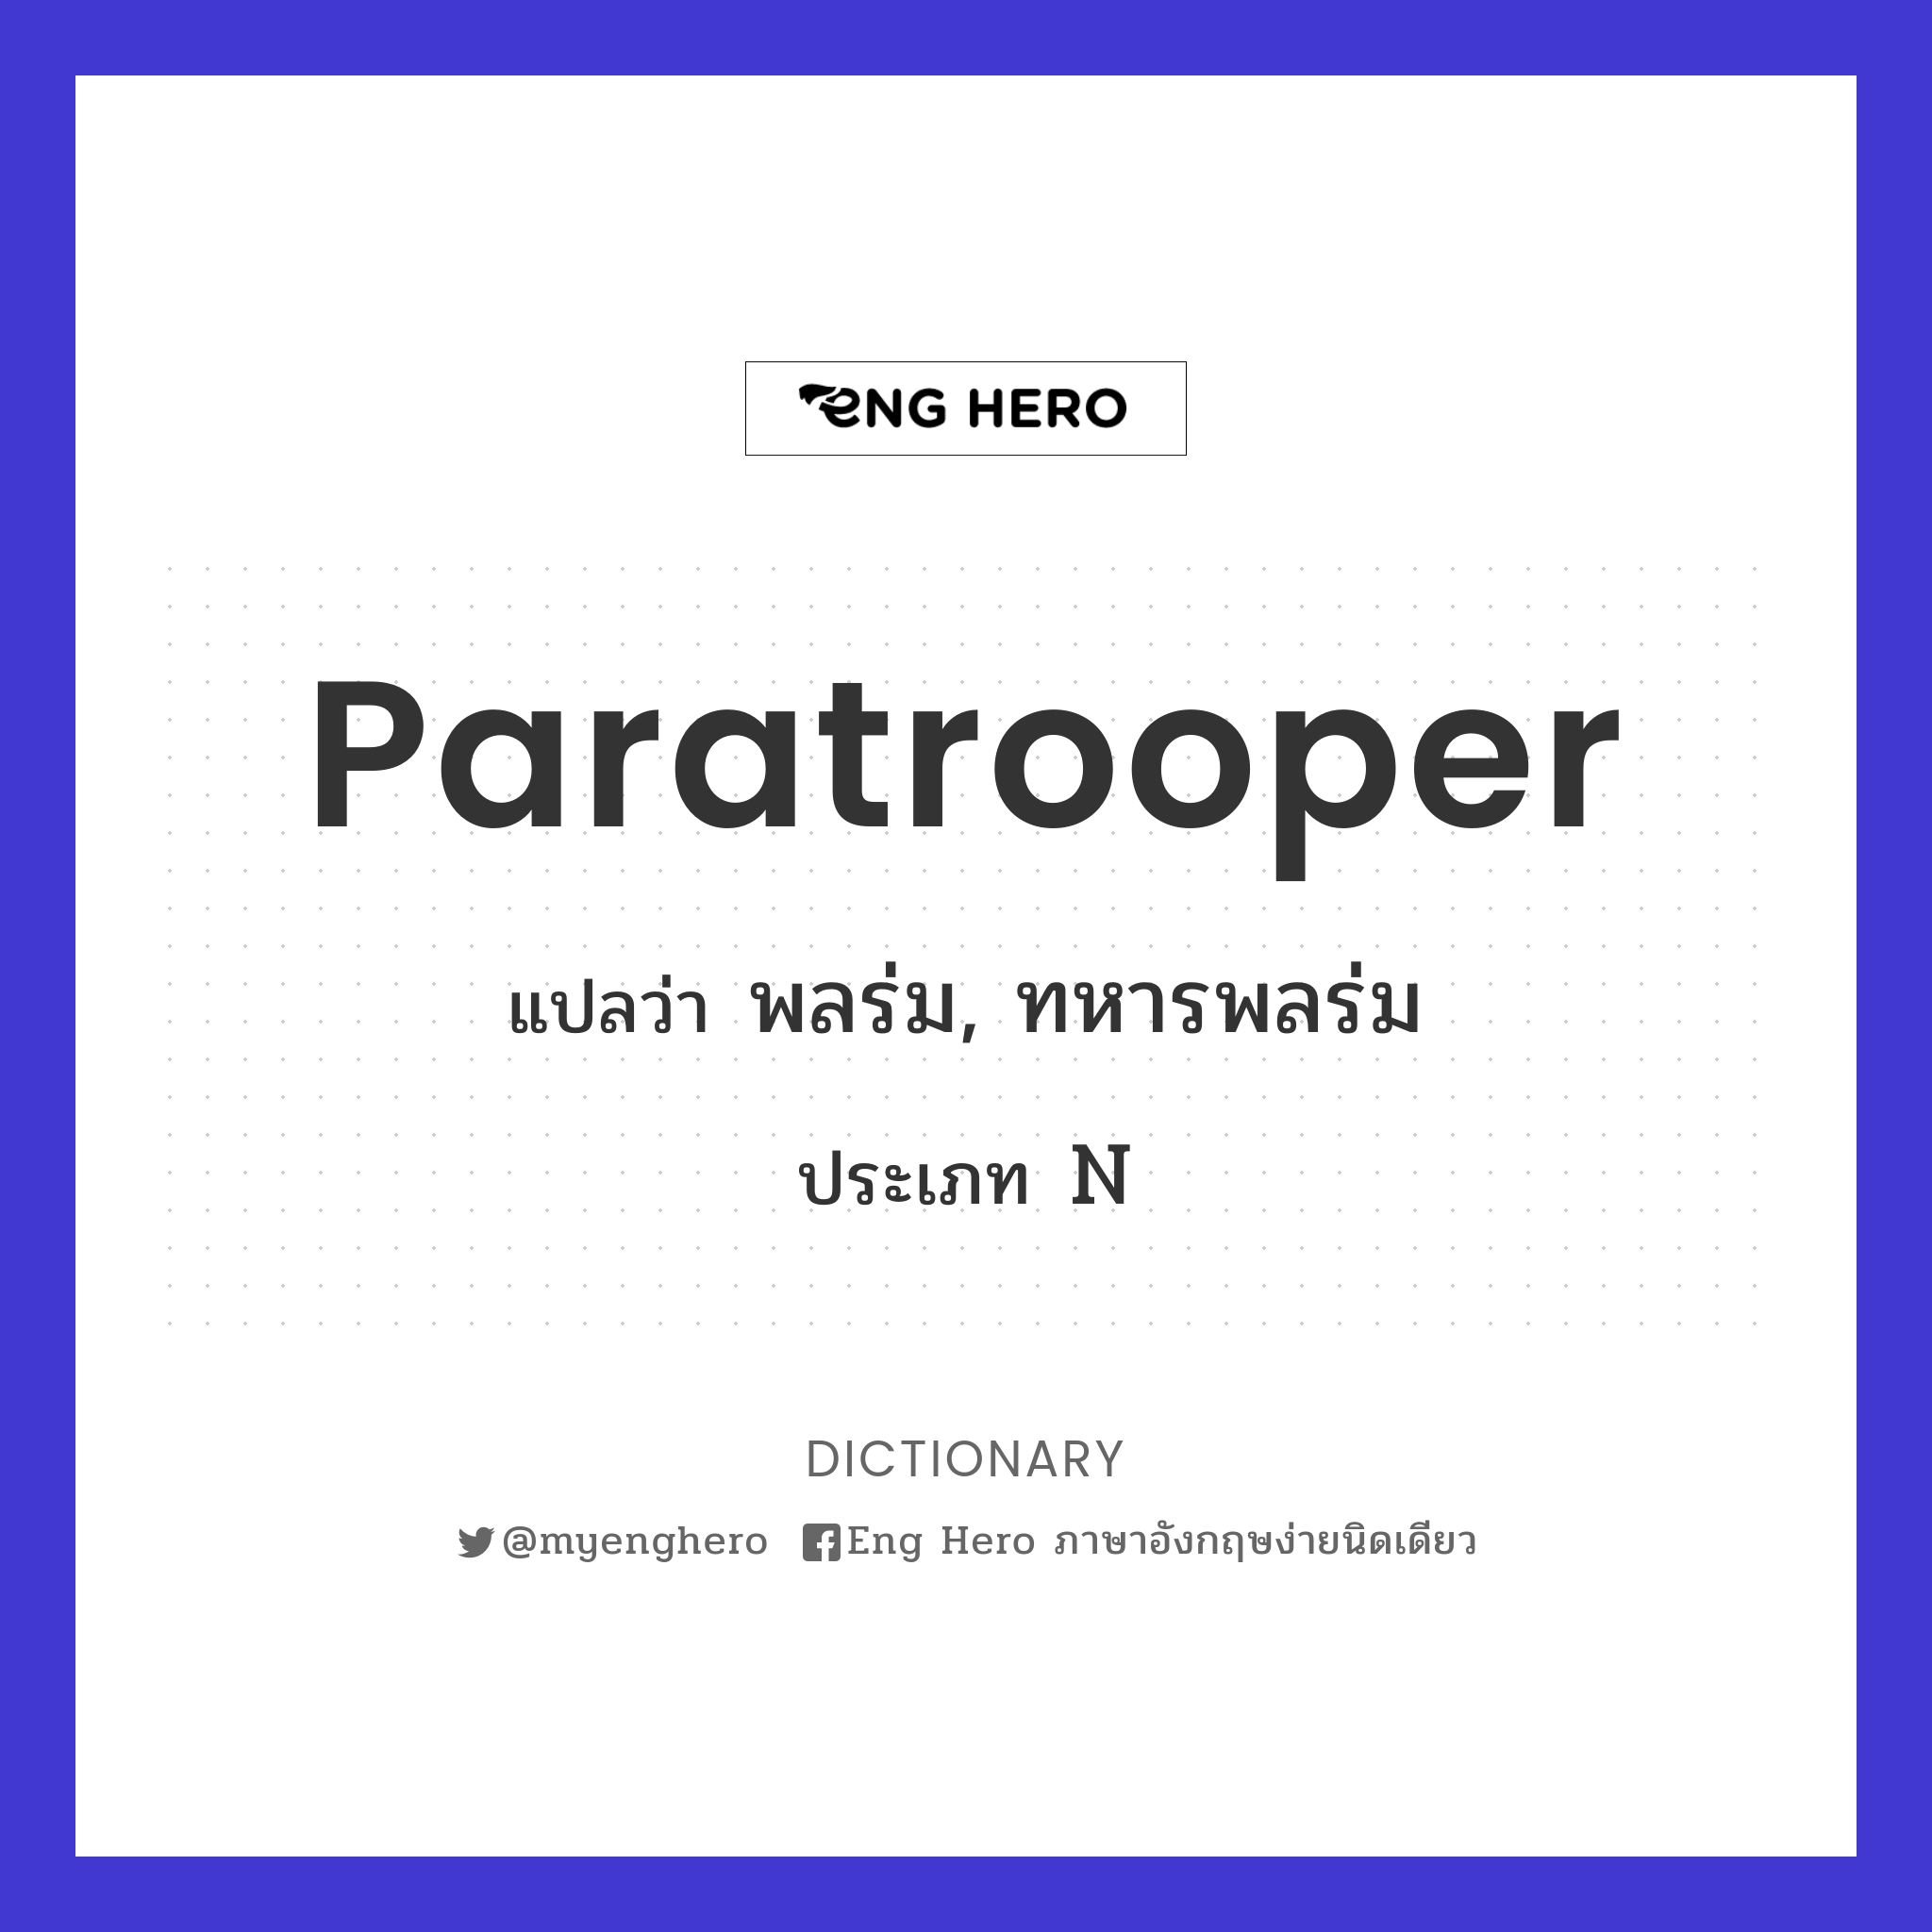 paratrooper